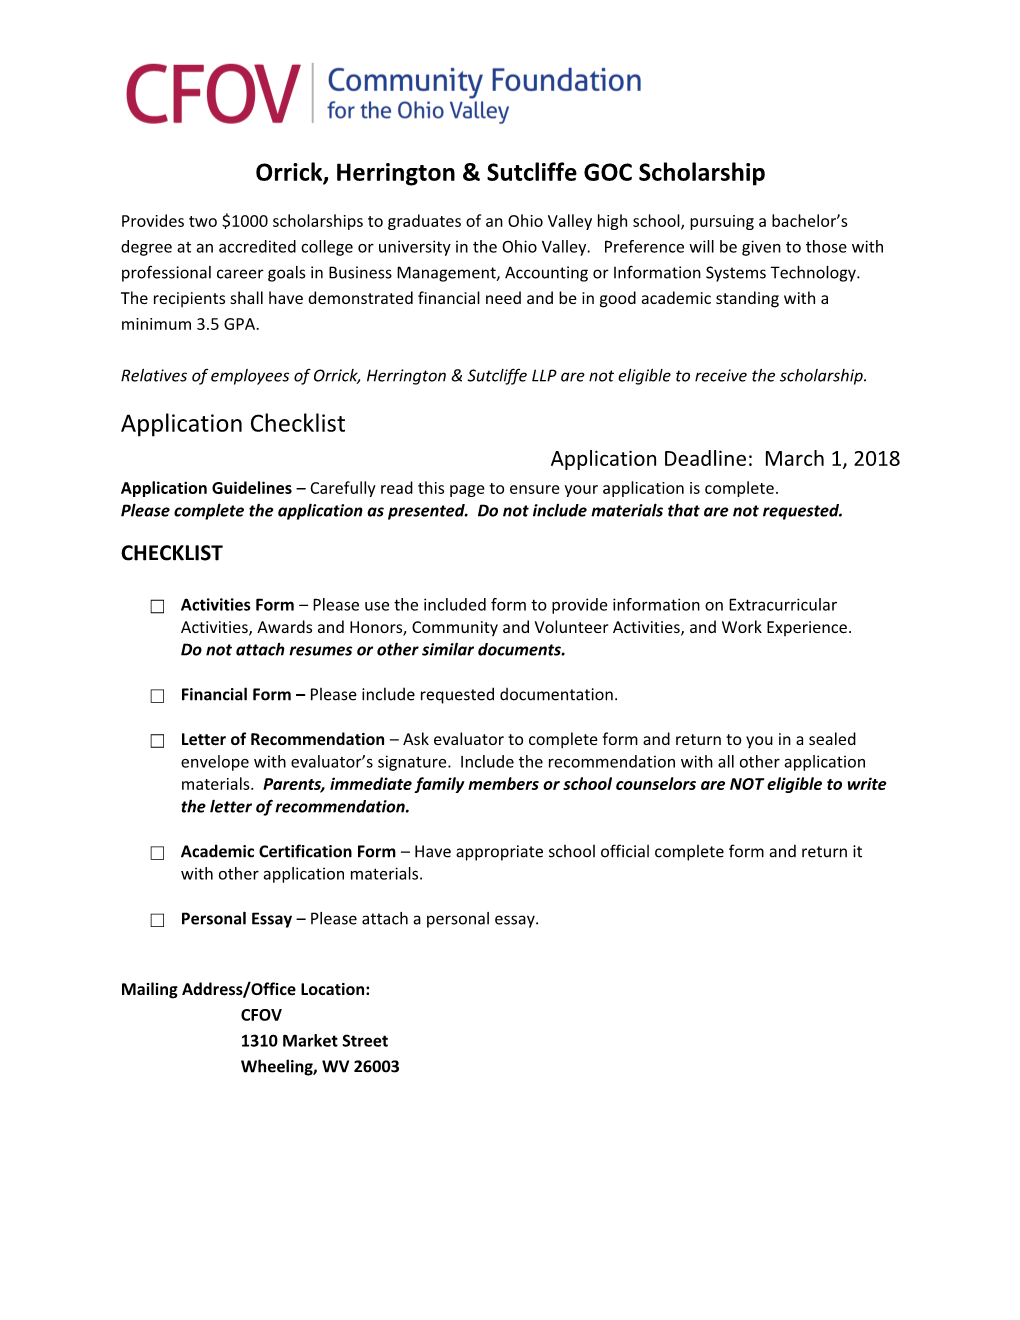 Orrick, Herrington & Sutcliffe GOC Scholarship